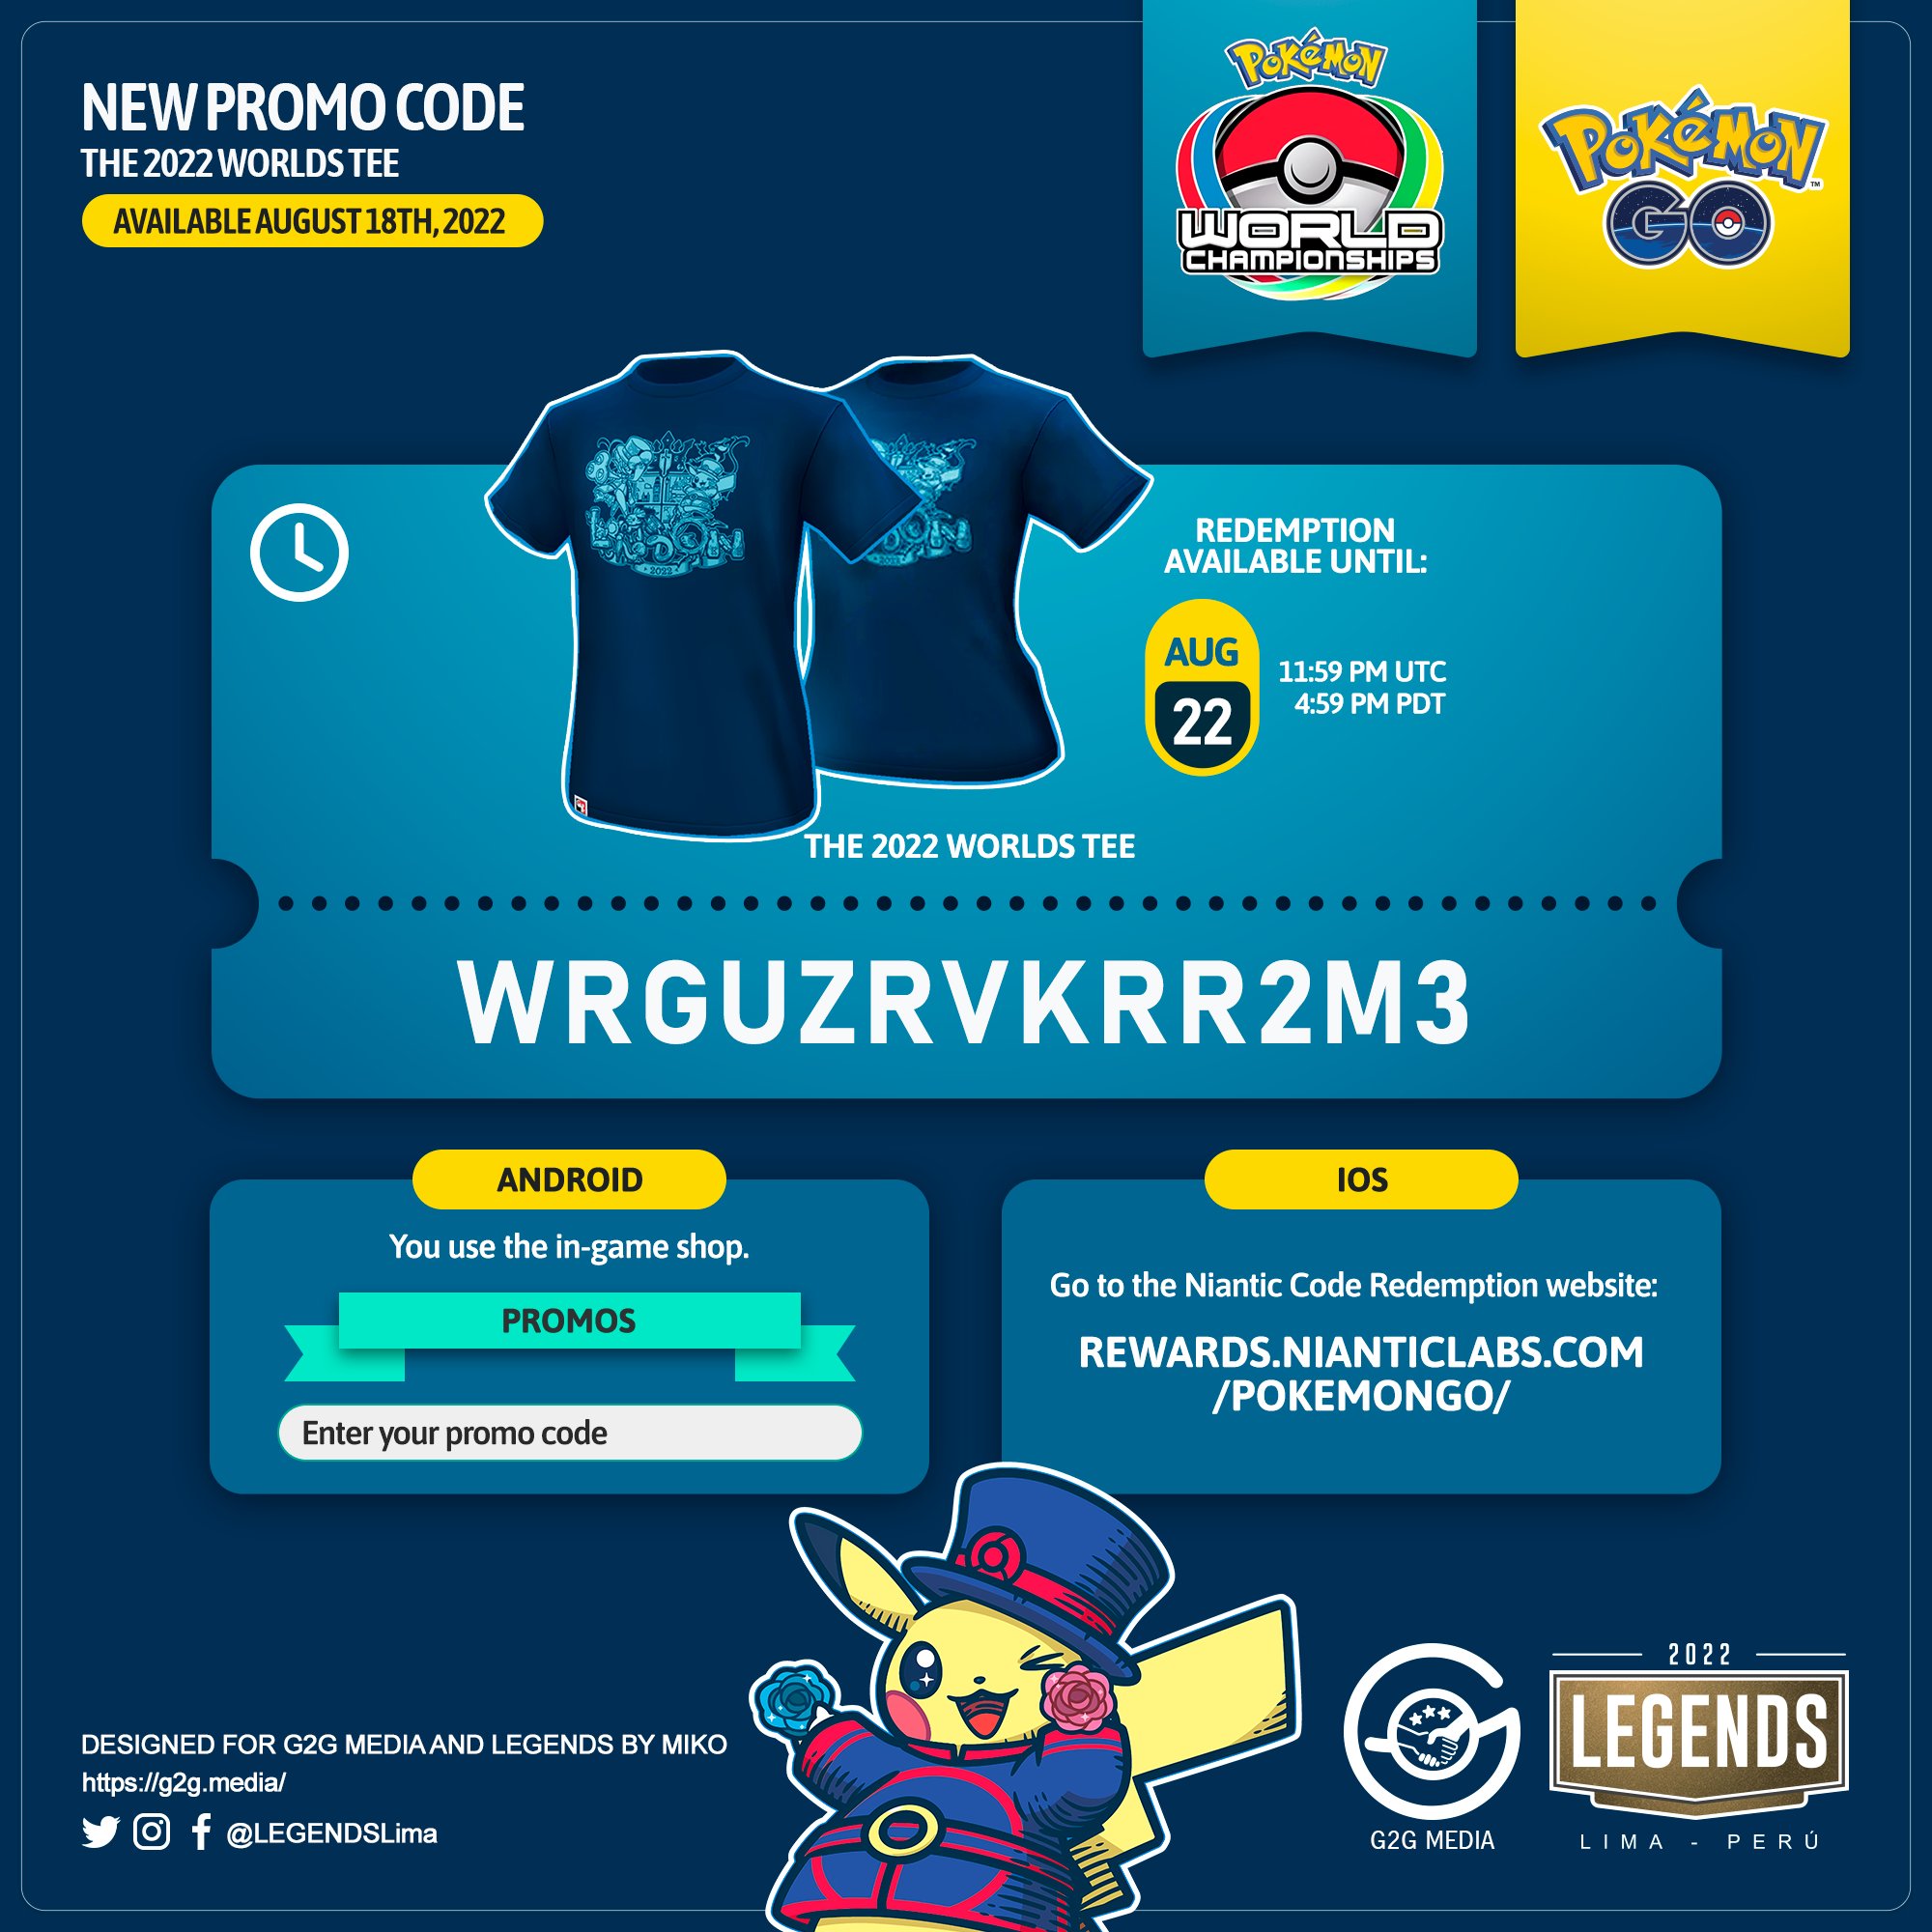 Mikographics - New promo code: 4DSJTSPX4B9AH Claim rewards:   #PokemonGO #PokemonGOApp